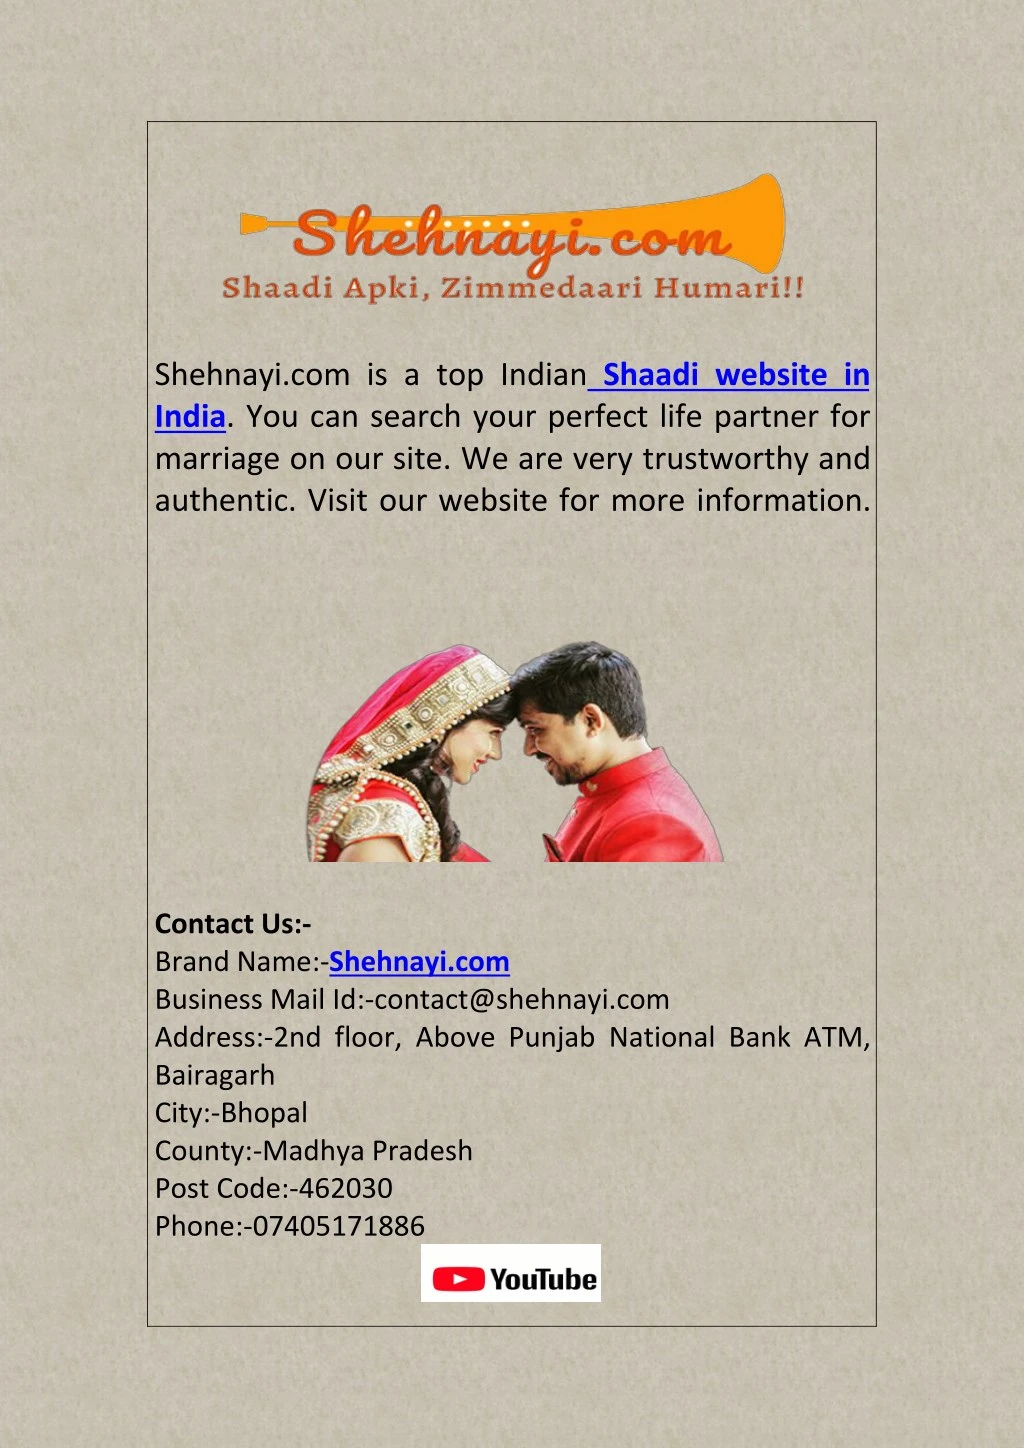 shehnayi com is a top indian shaadi website